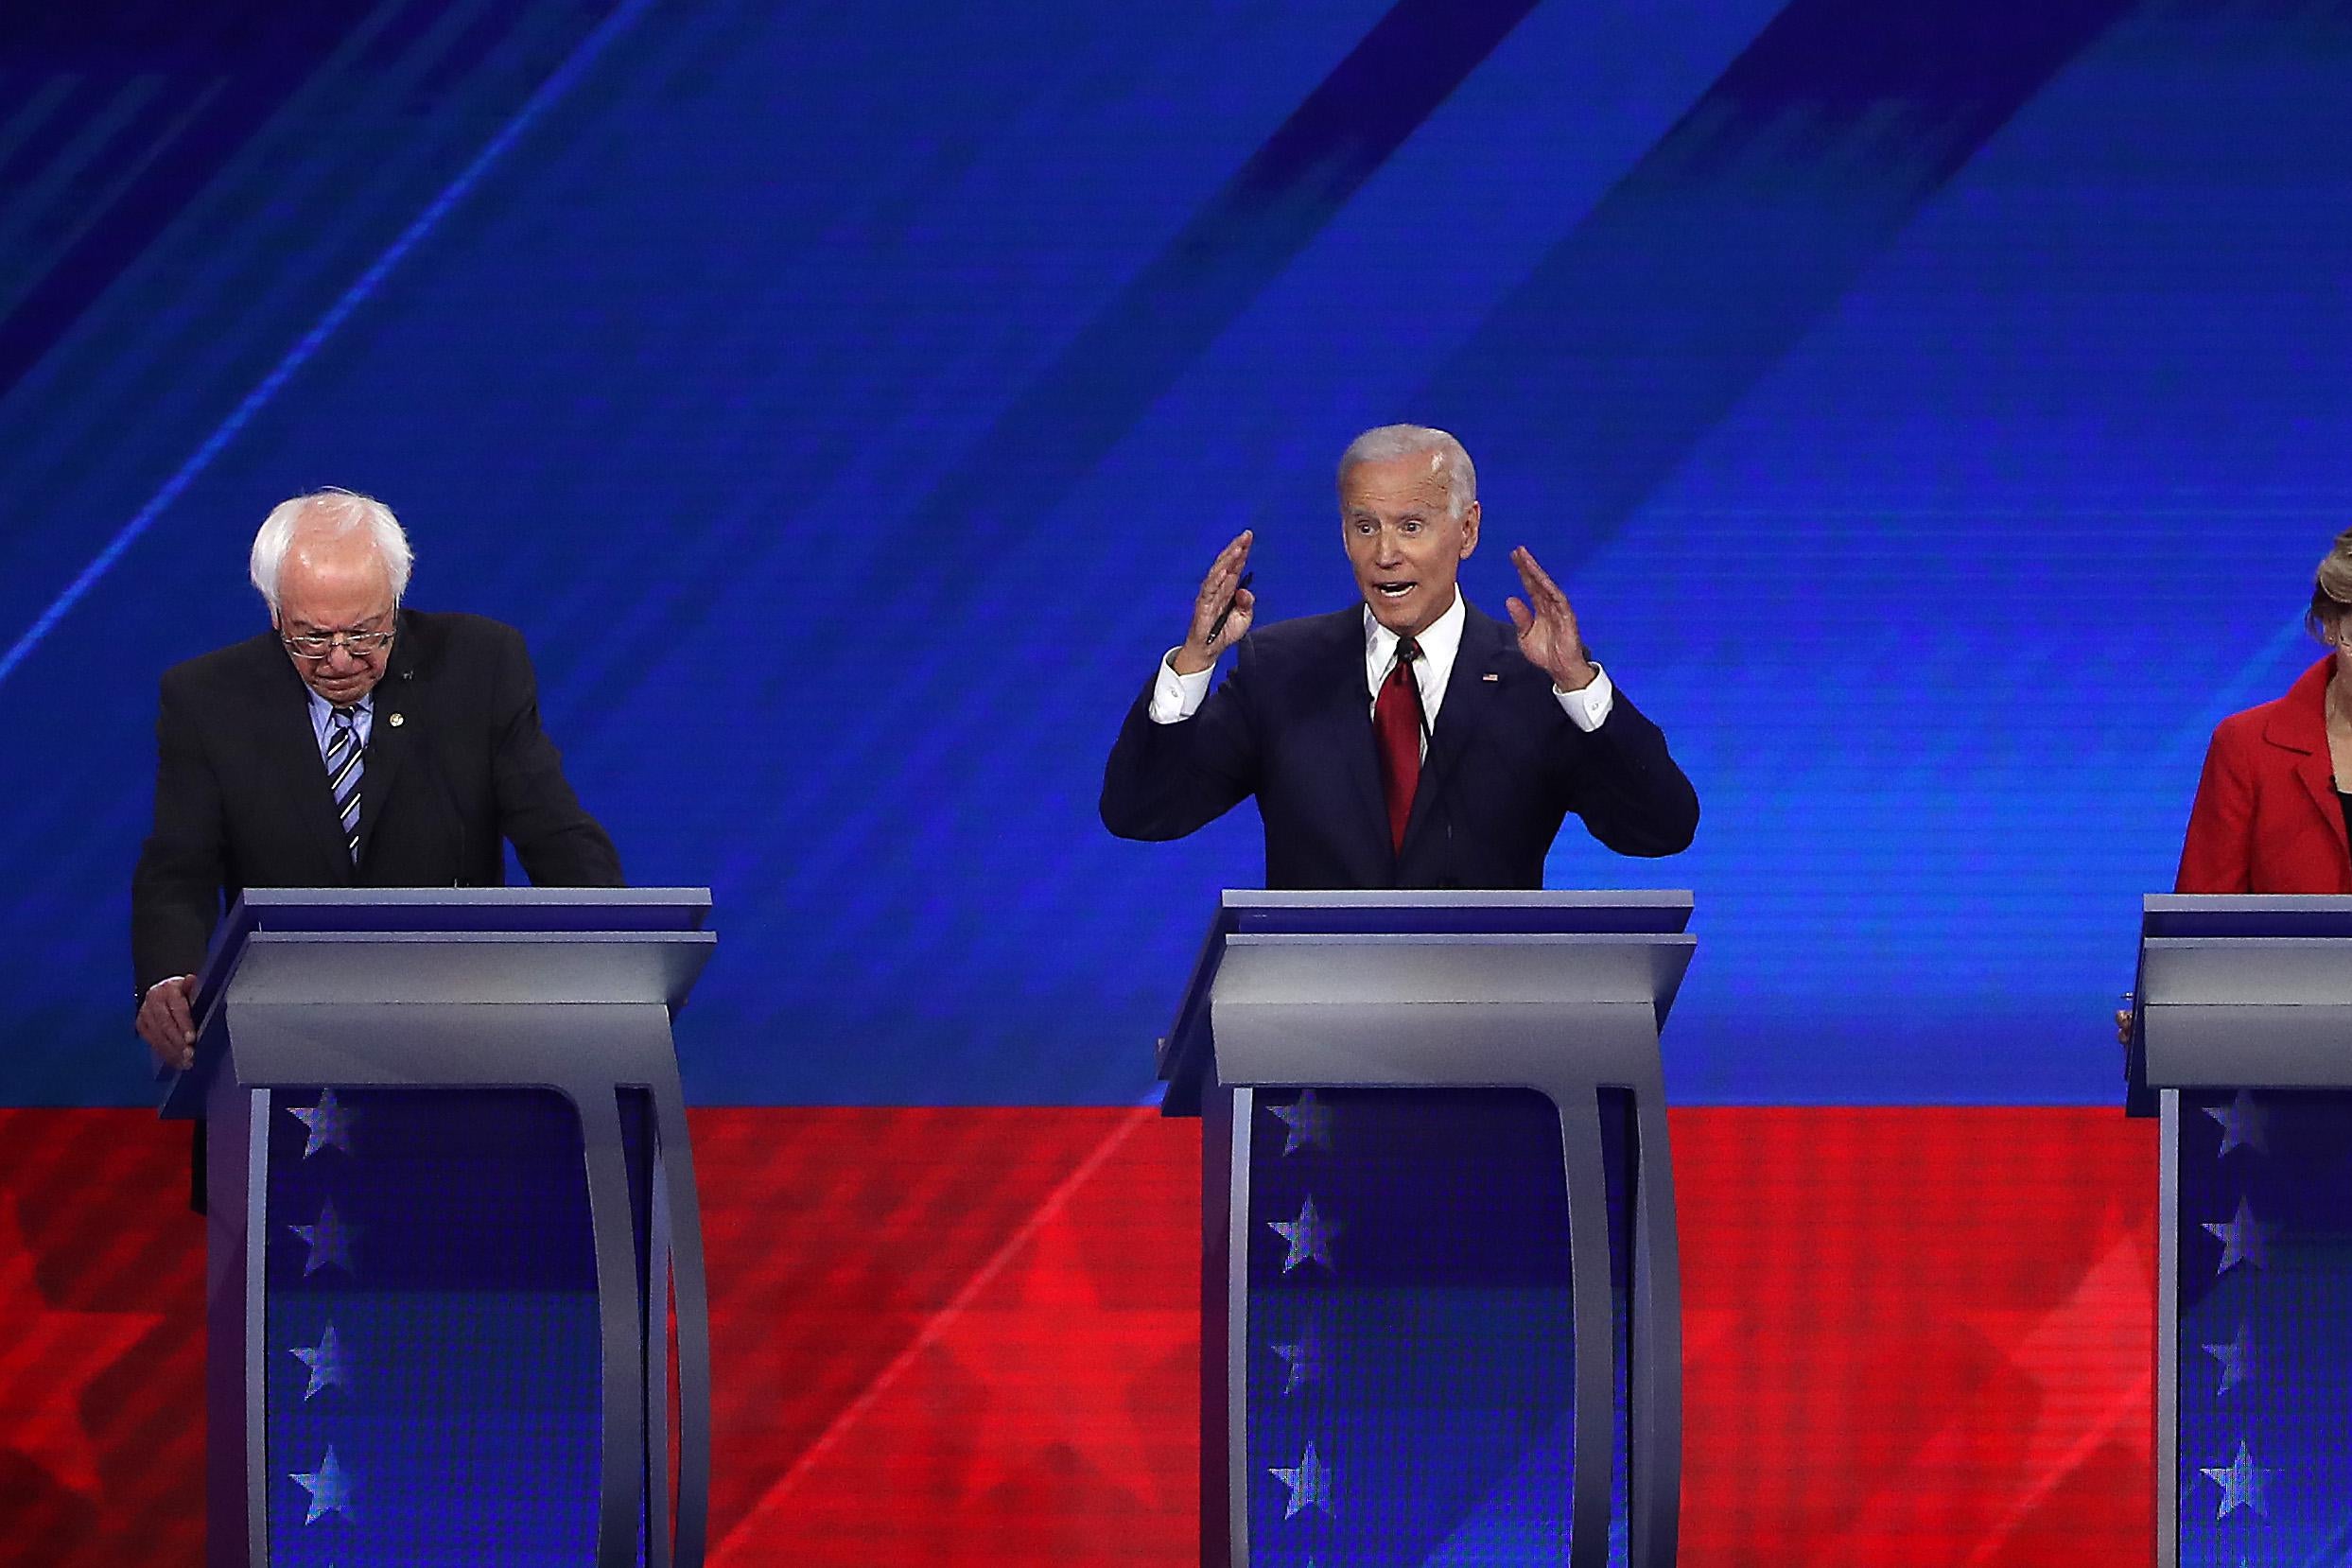 Bernie Sanders, Joe Biden, and Elizabeth Warren at their podiums.